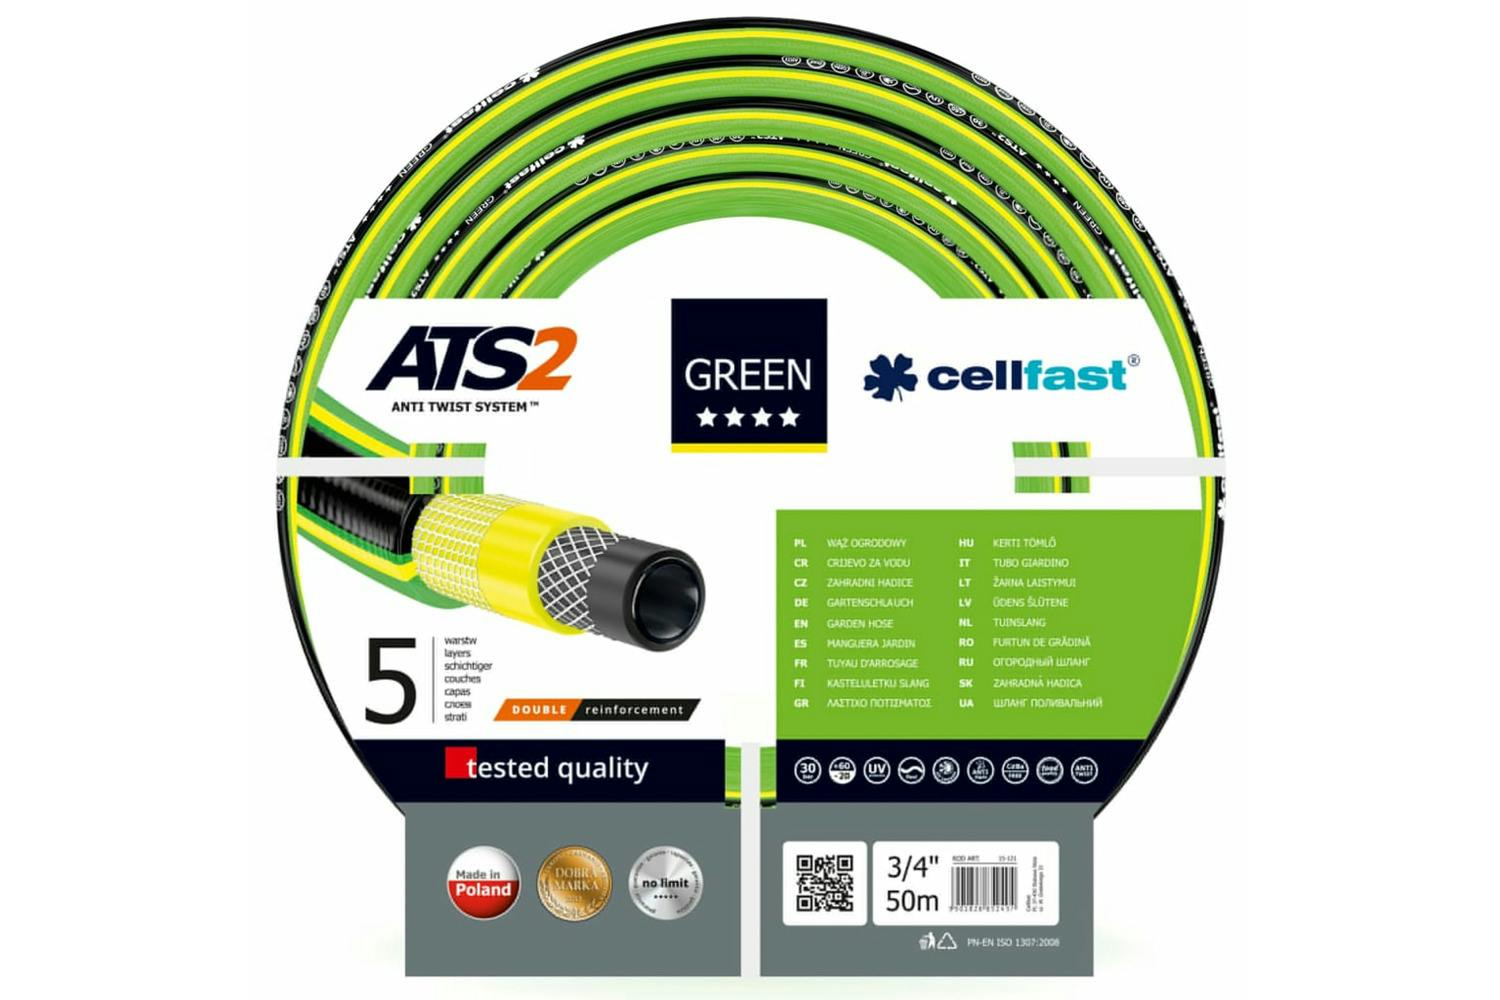 Cellfast 432525 Garden Hose Ats2 3/4 50m Green"